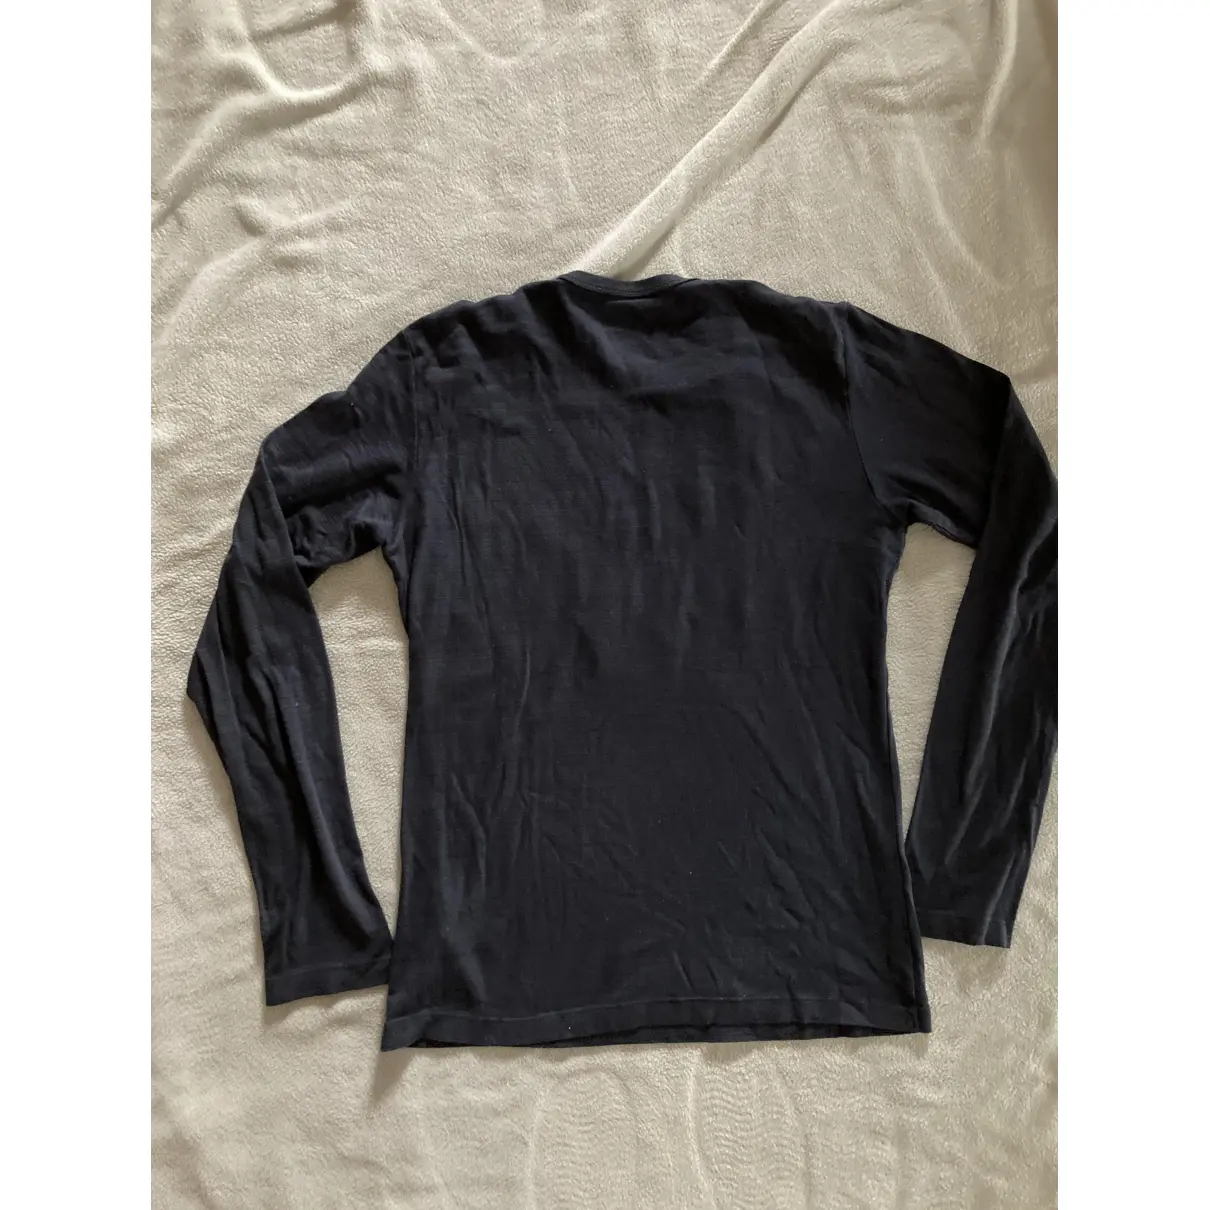 Buy Ra-Re Black Cotton T-shirt online